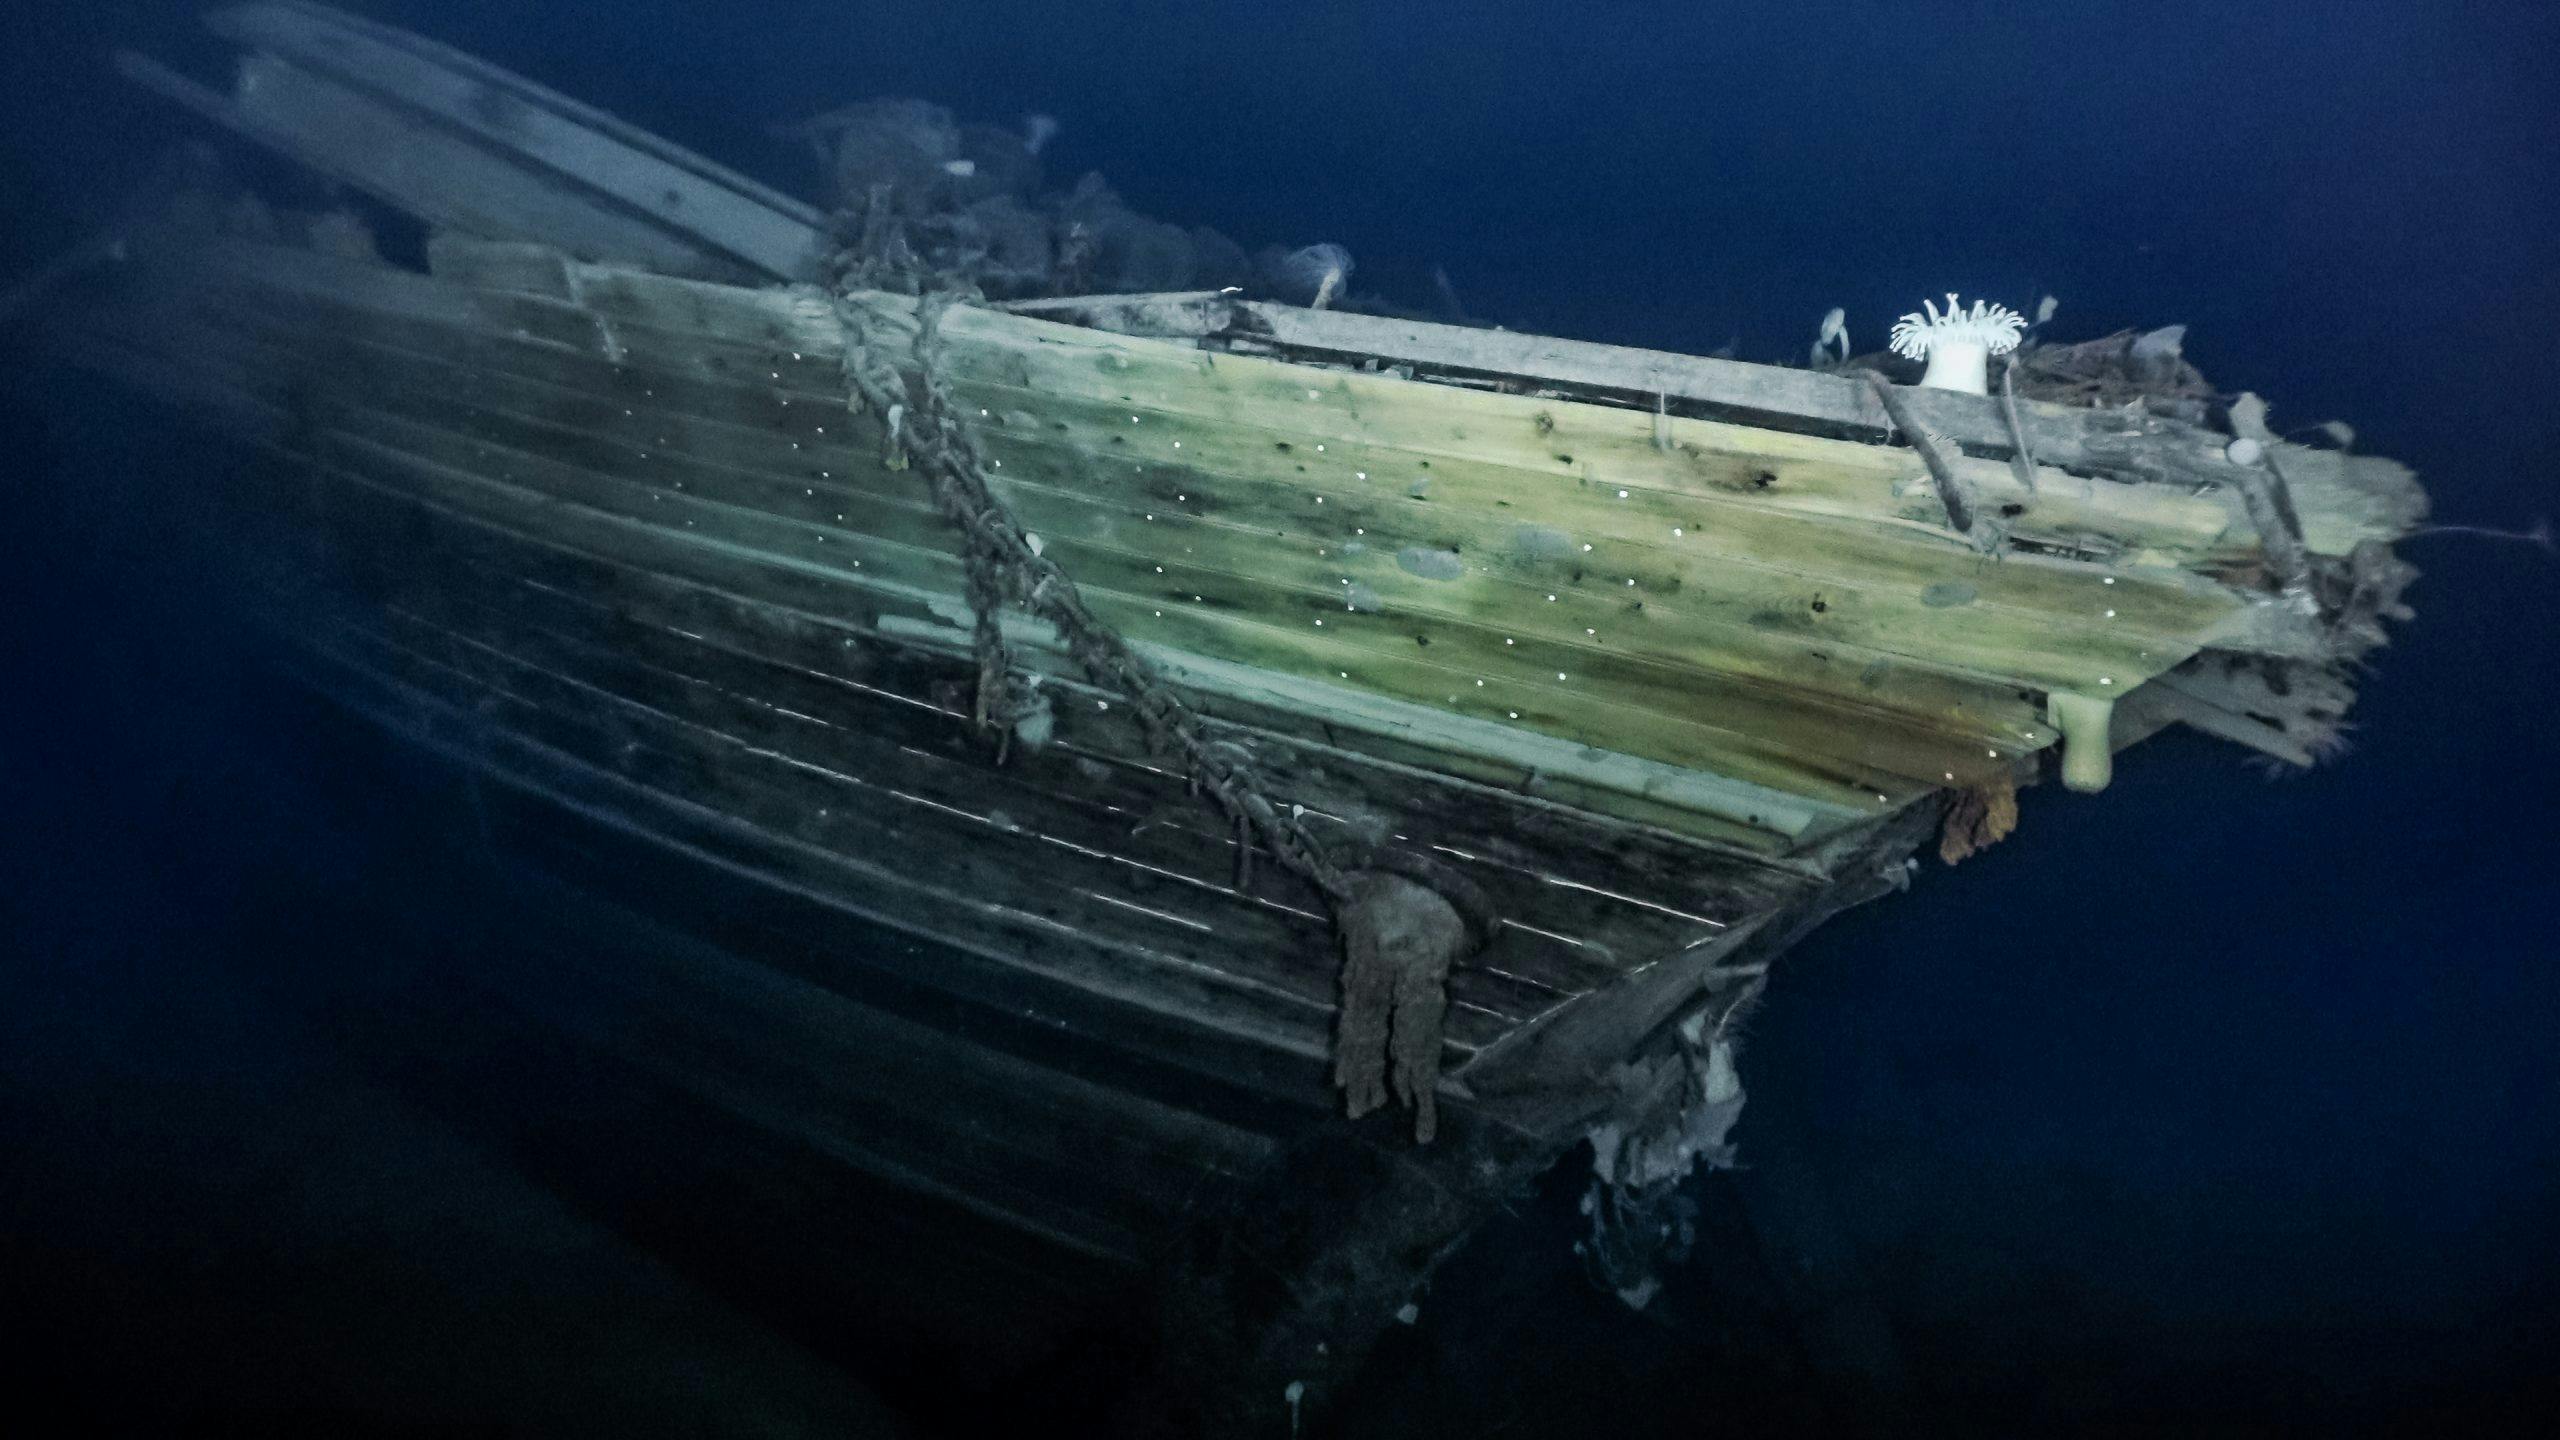 endurance shackleton Antarctica wreck discovered